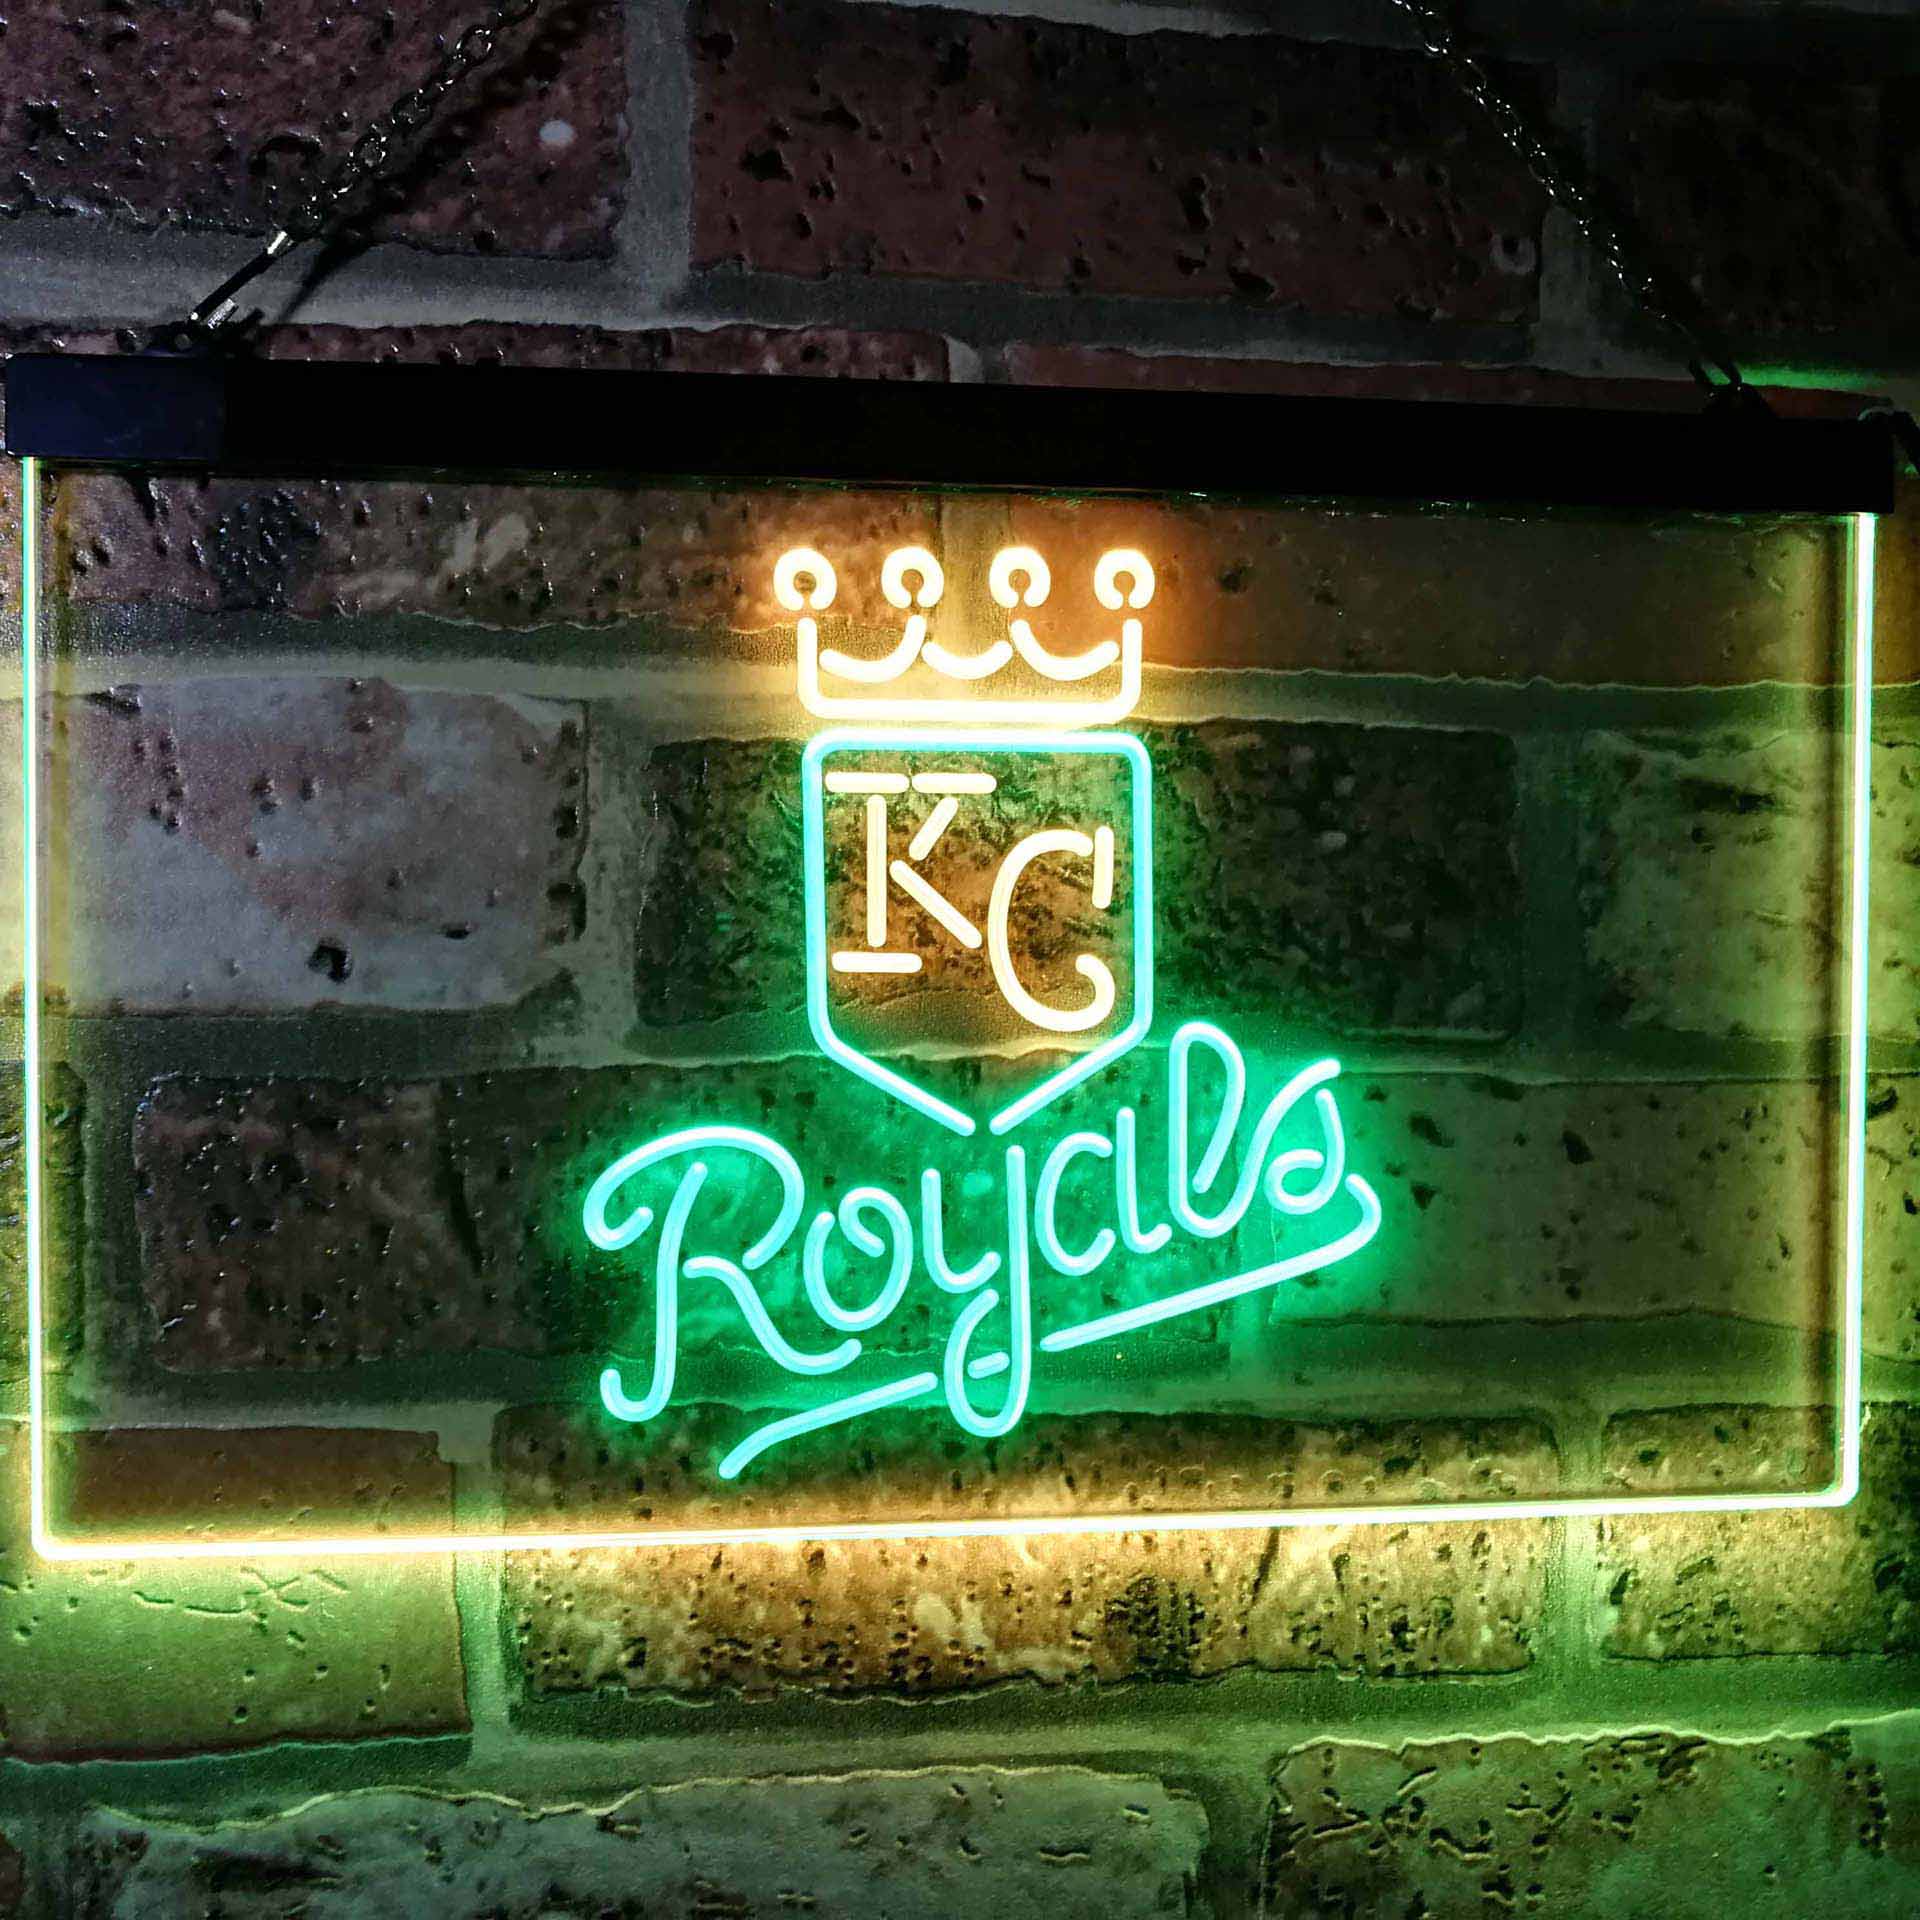 Kansas City Royals Neon LED Sign